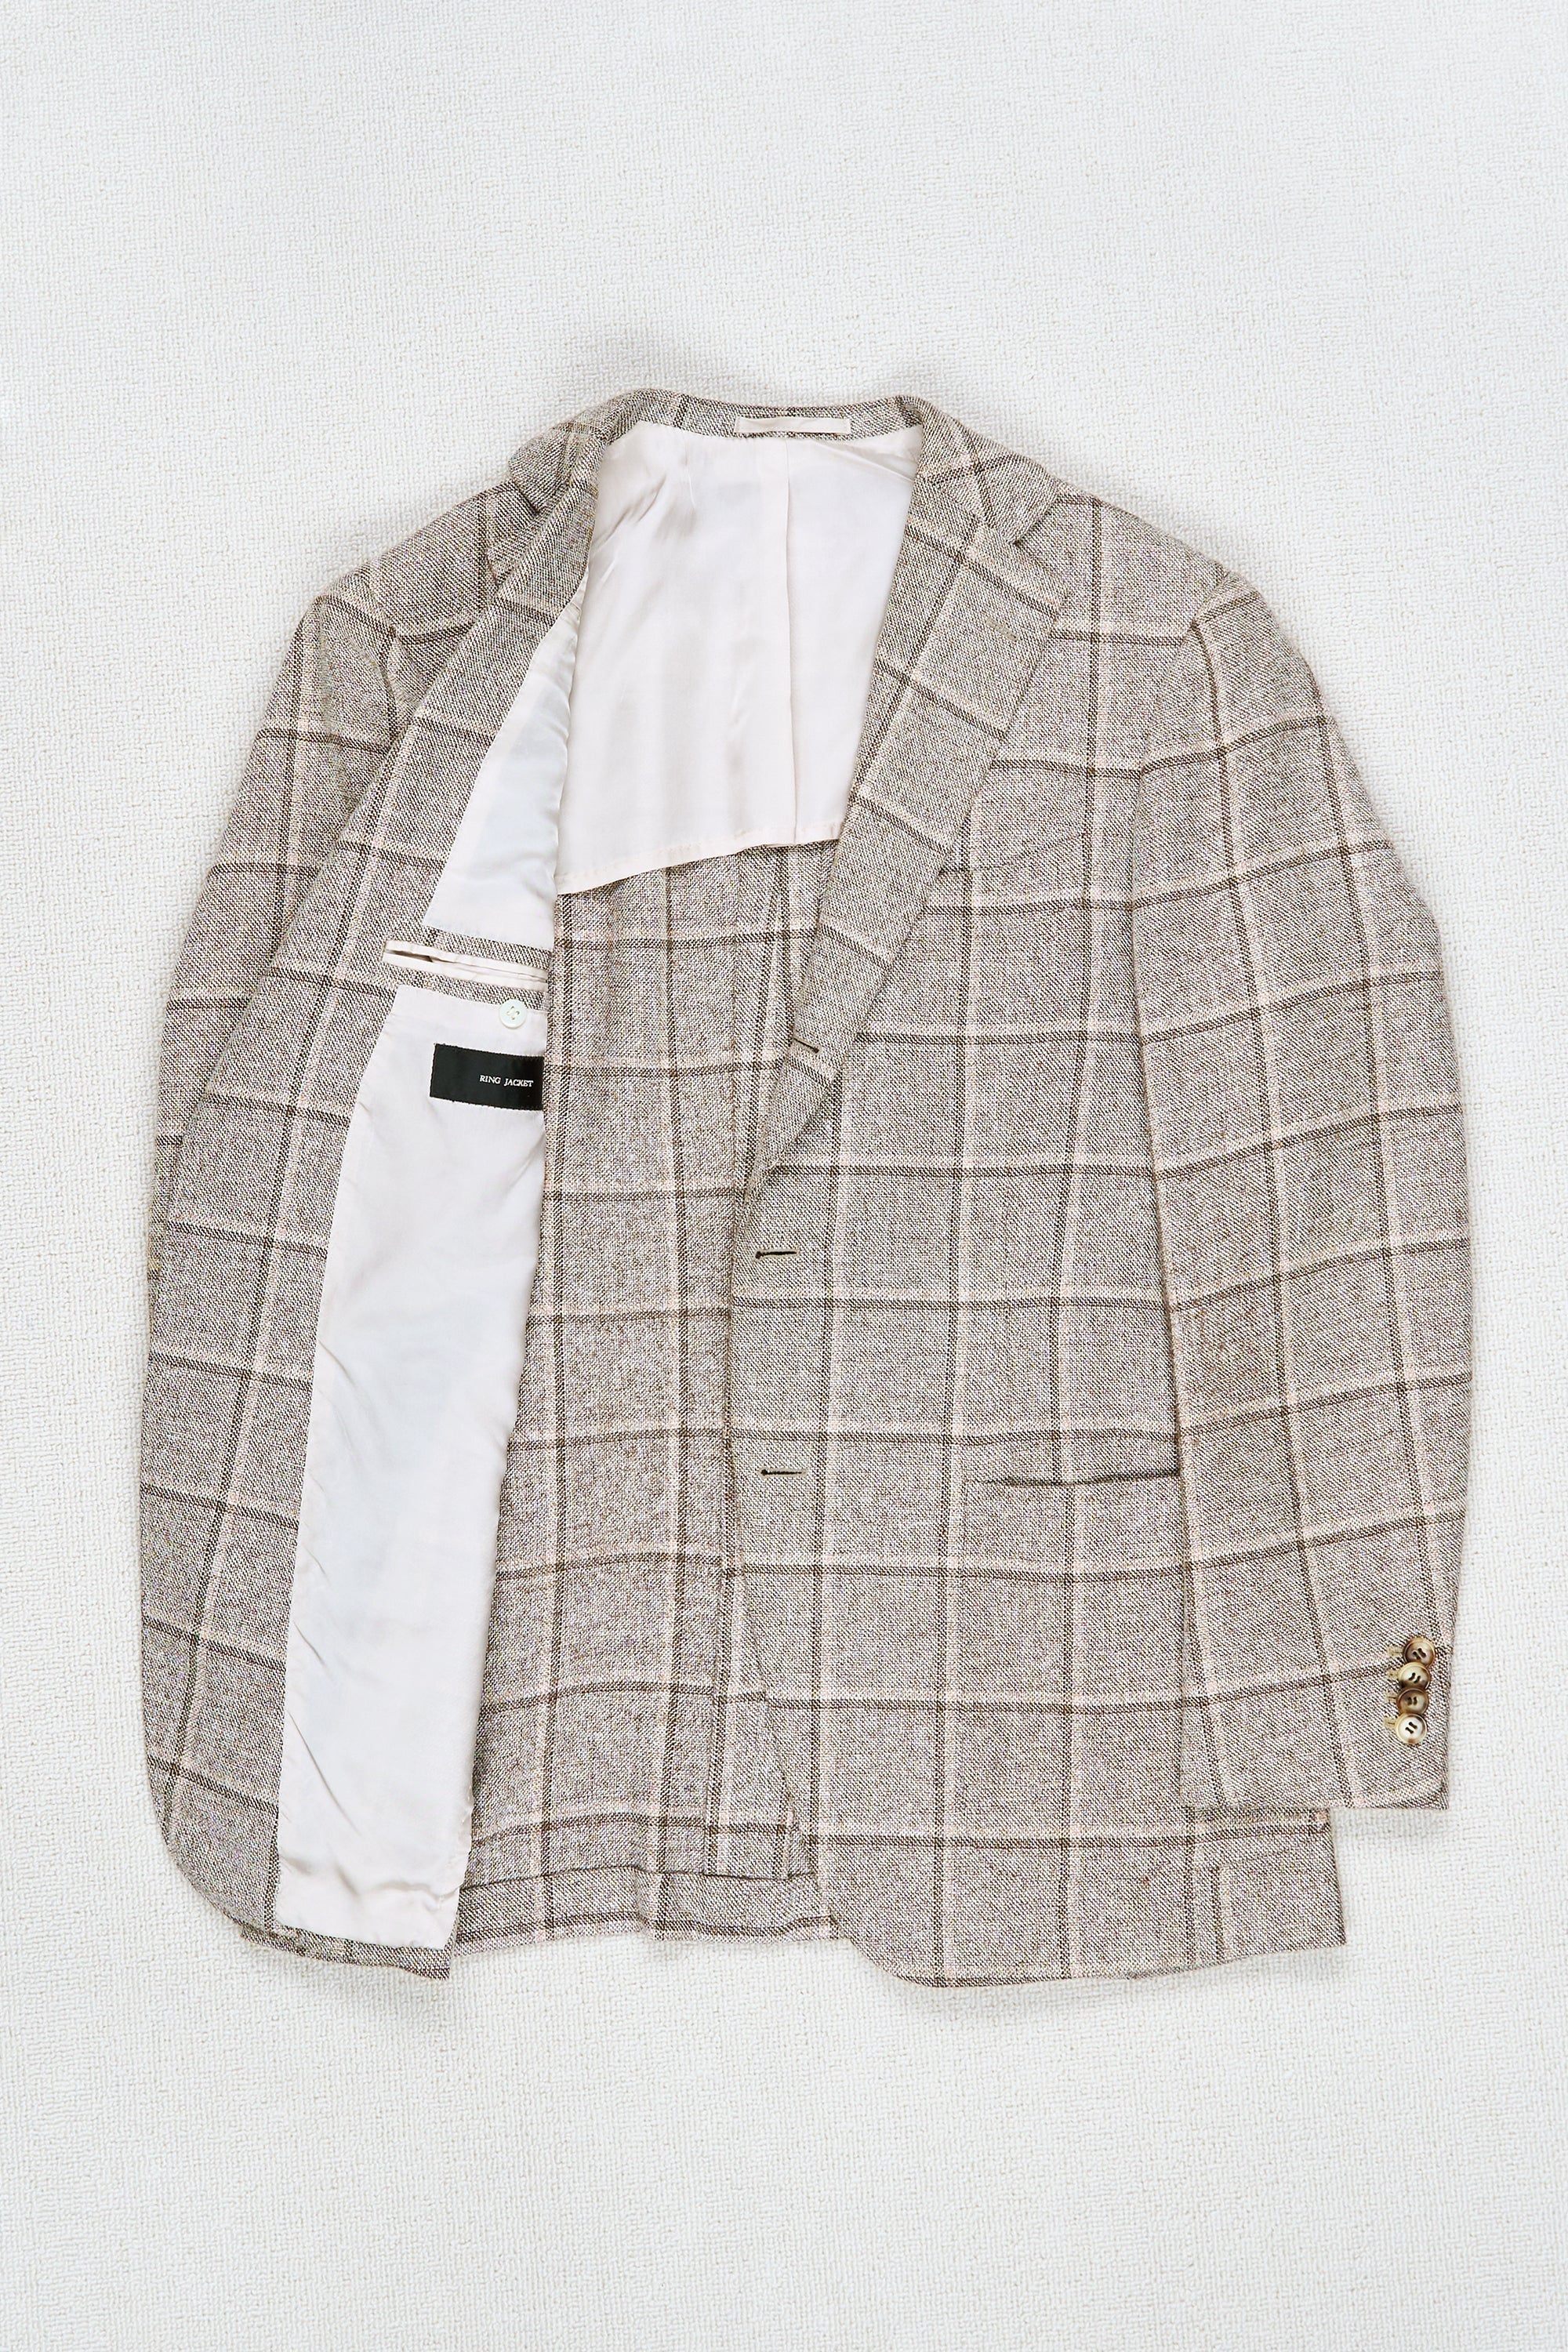 Ring Jacket 184 Light Brown Windowpane Wool/Silk/Linen Sport Coat